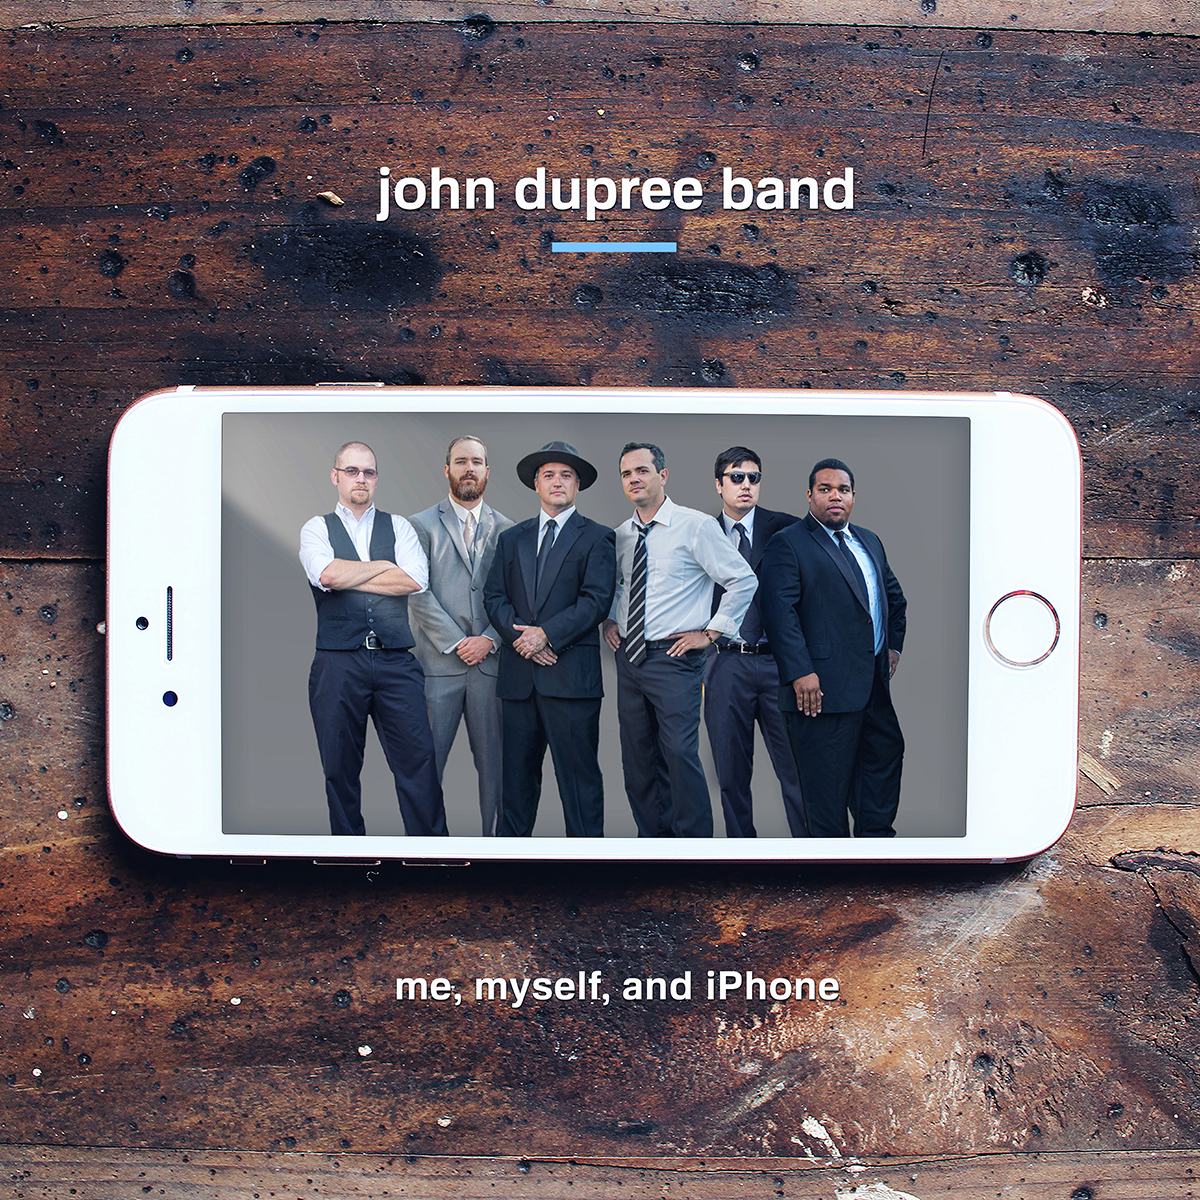 john dupree band - Me, Myself, and iPhone single cover FINAL